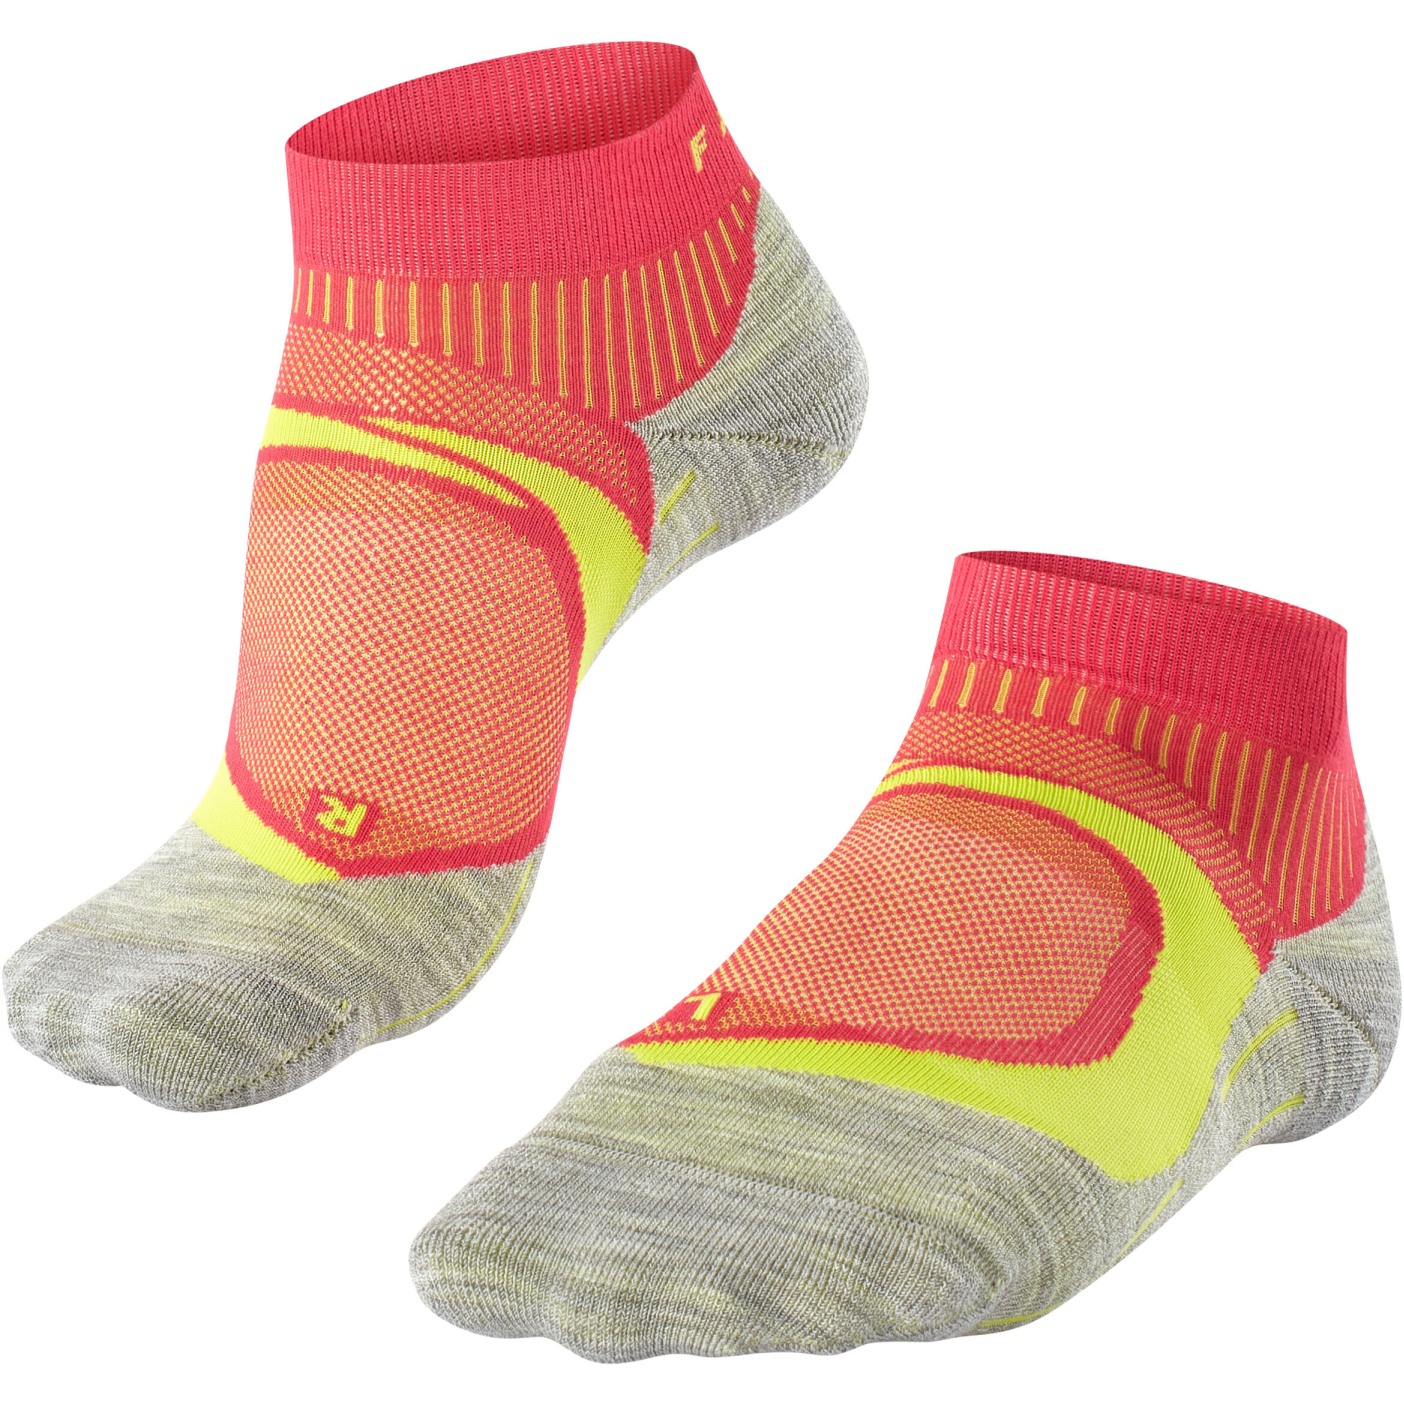 Picture of Falke RU4 Endurance Cool Short Running Socks Women - neop red-pool 8567